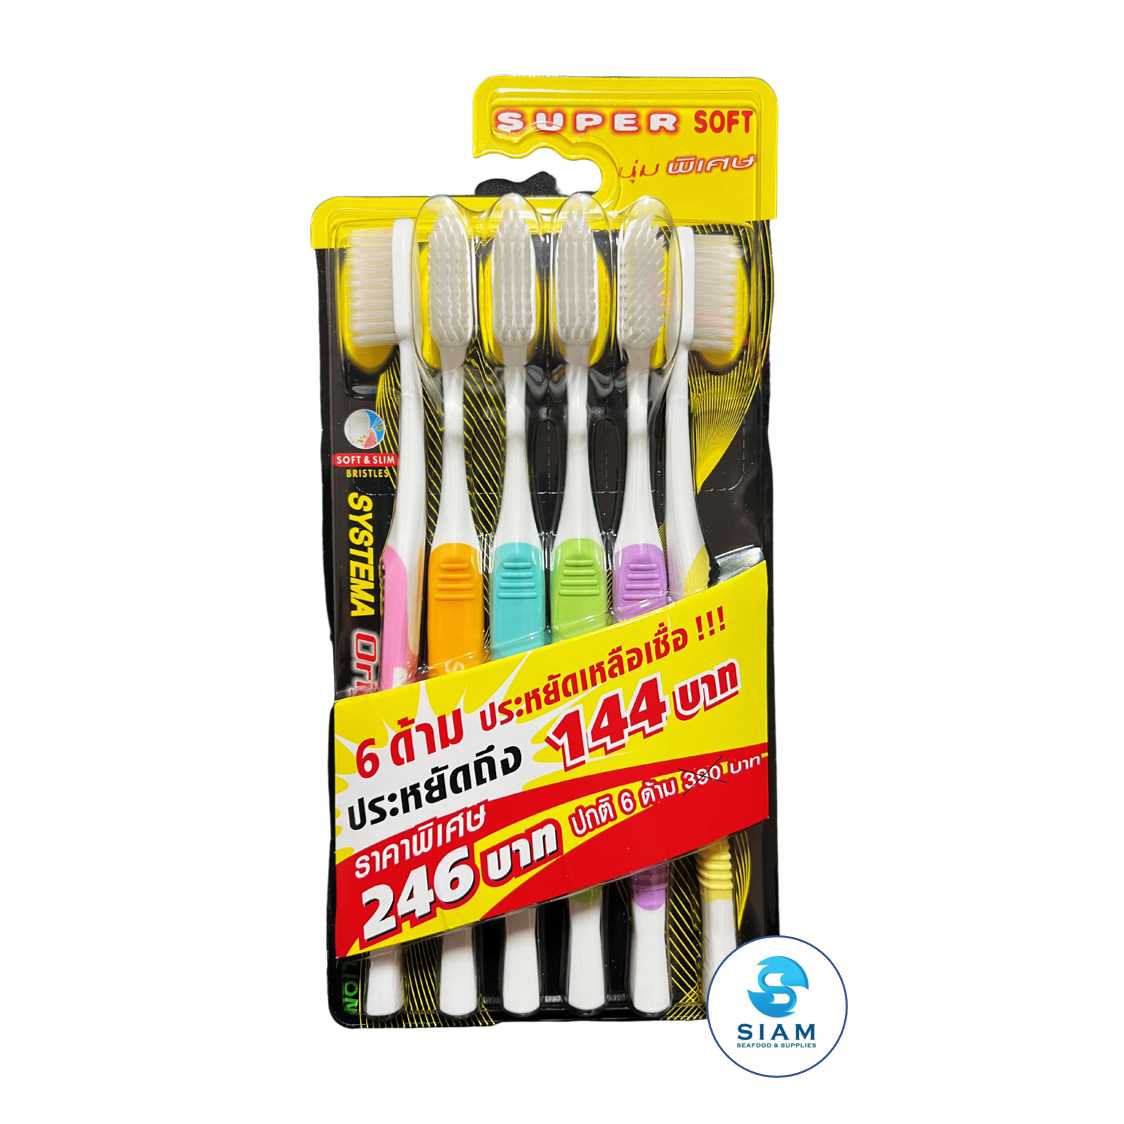 Toothbrush Medium, Super Soft, Soft & Slim Bristles, Original - Systema (6 Packs-Vol Wt 12 oz) แปรงสีฟันซิสเท็มมา ออริจินัล ซอฟท์แอนด์สลิม ขนาดกลาง รุ่นนุ่มพิเศษ shippable Systema